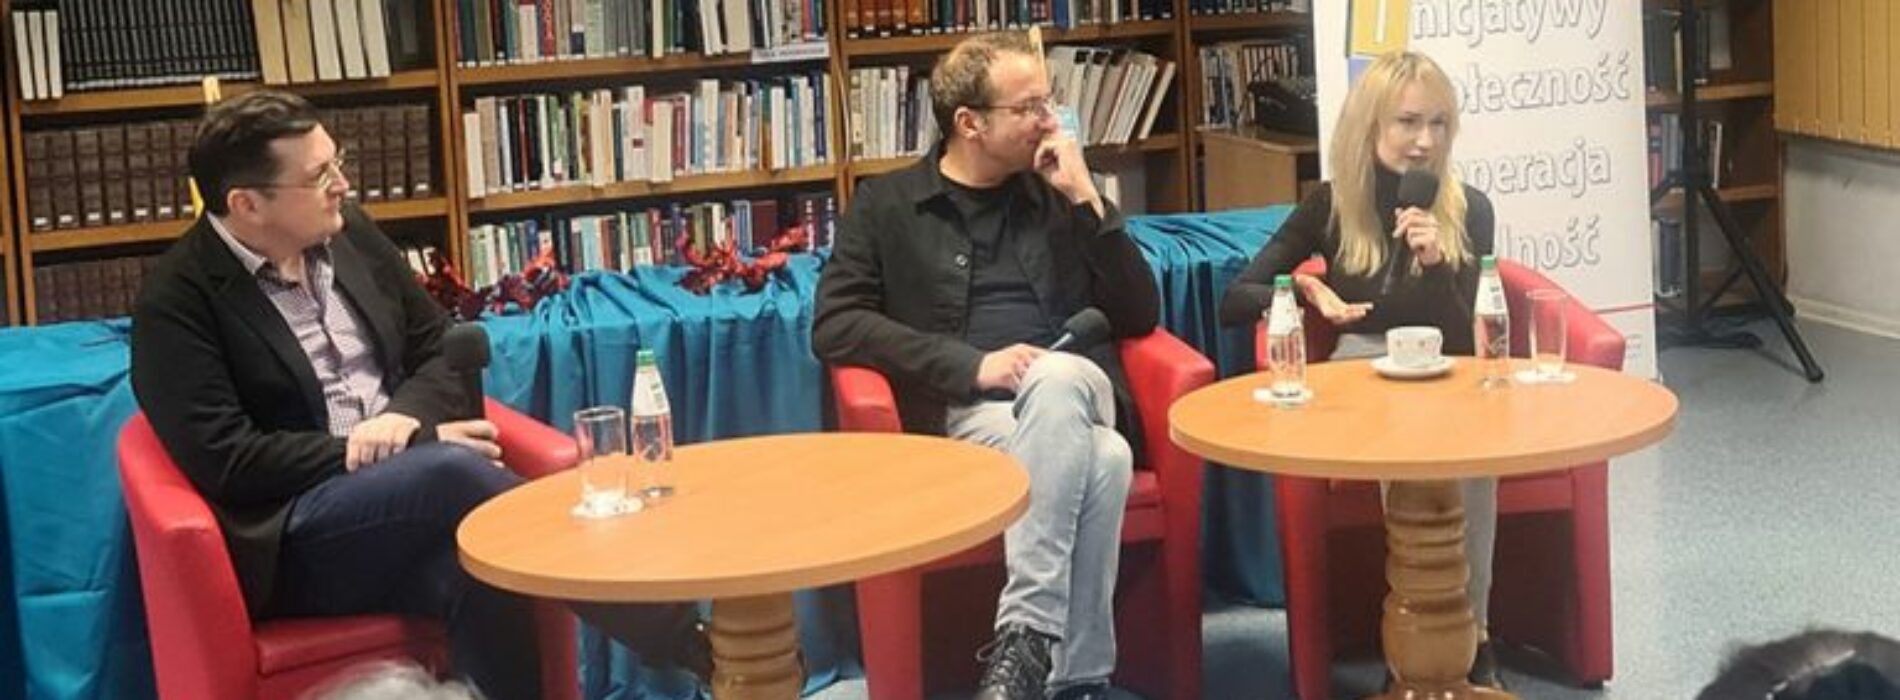 Spotkanie autorskie z Robertem Górskim i Moniką Sobień-Górską